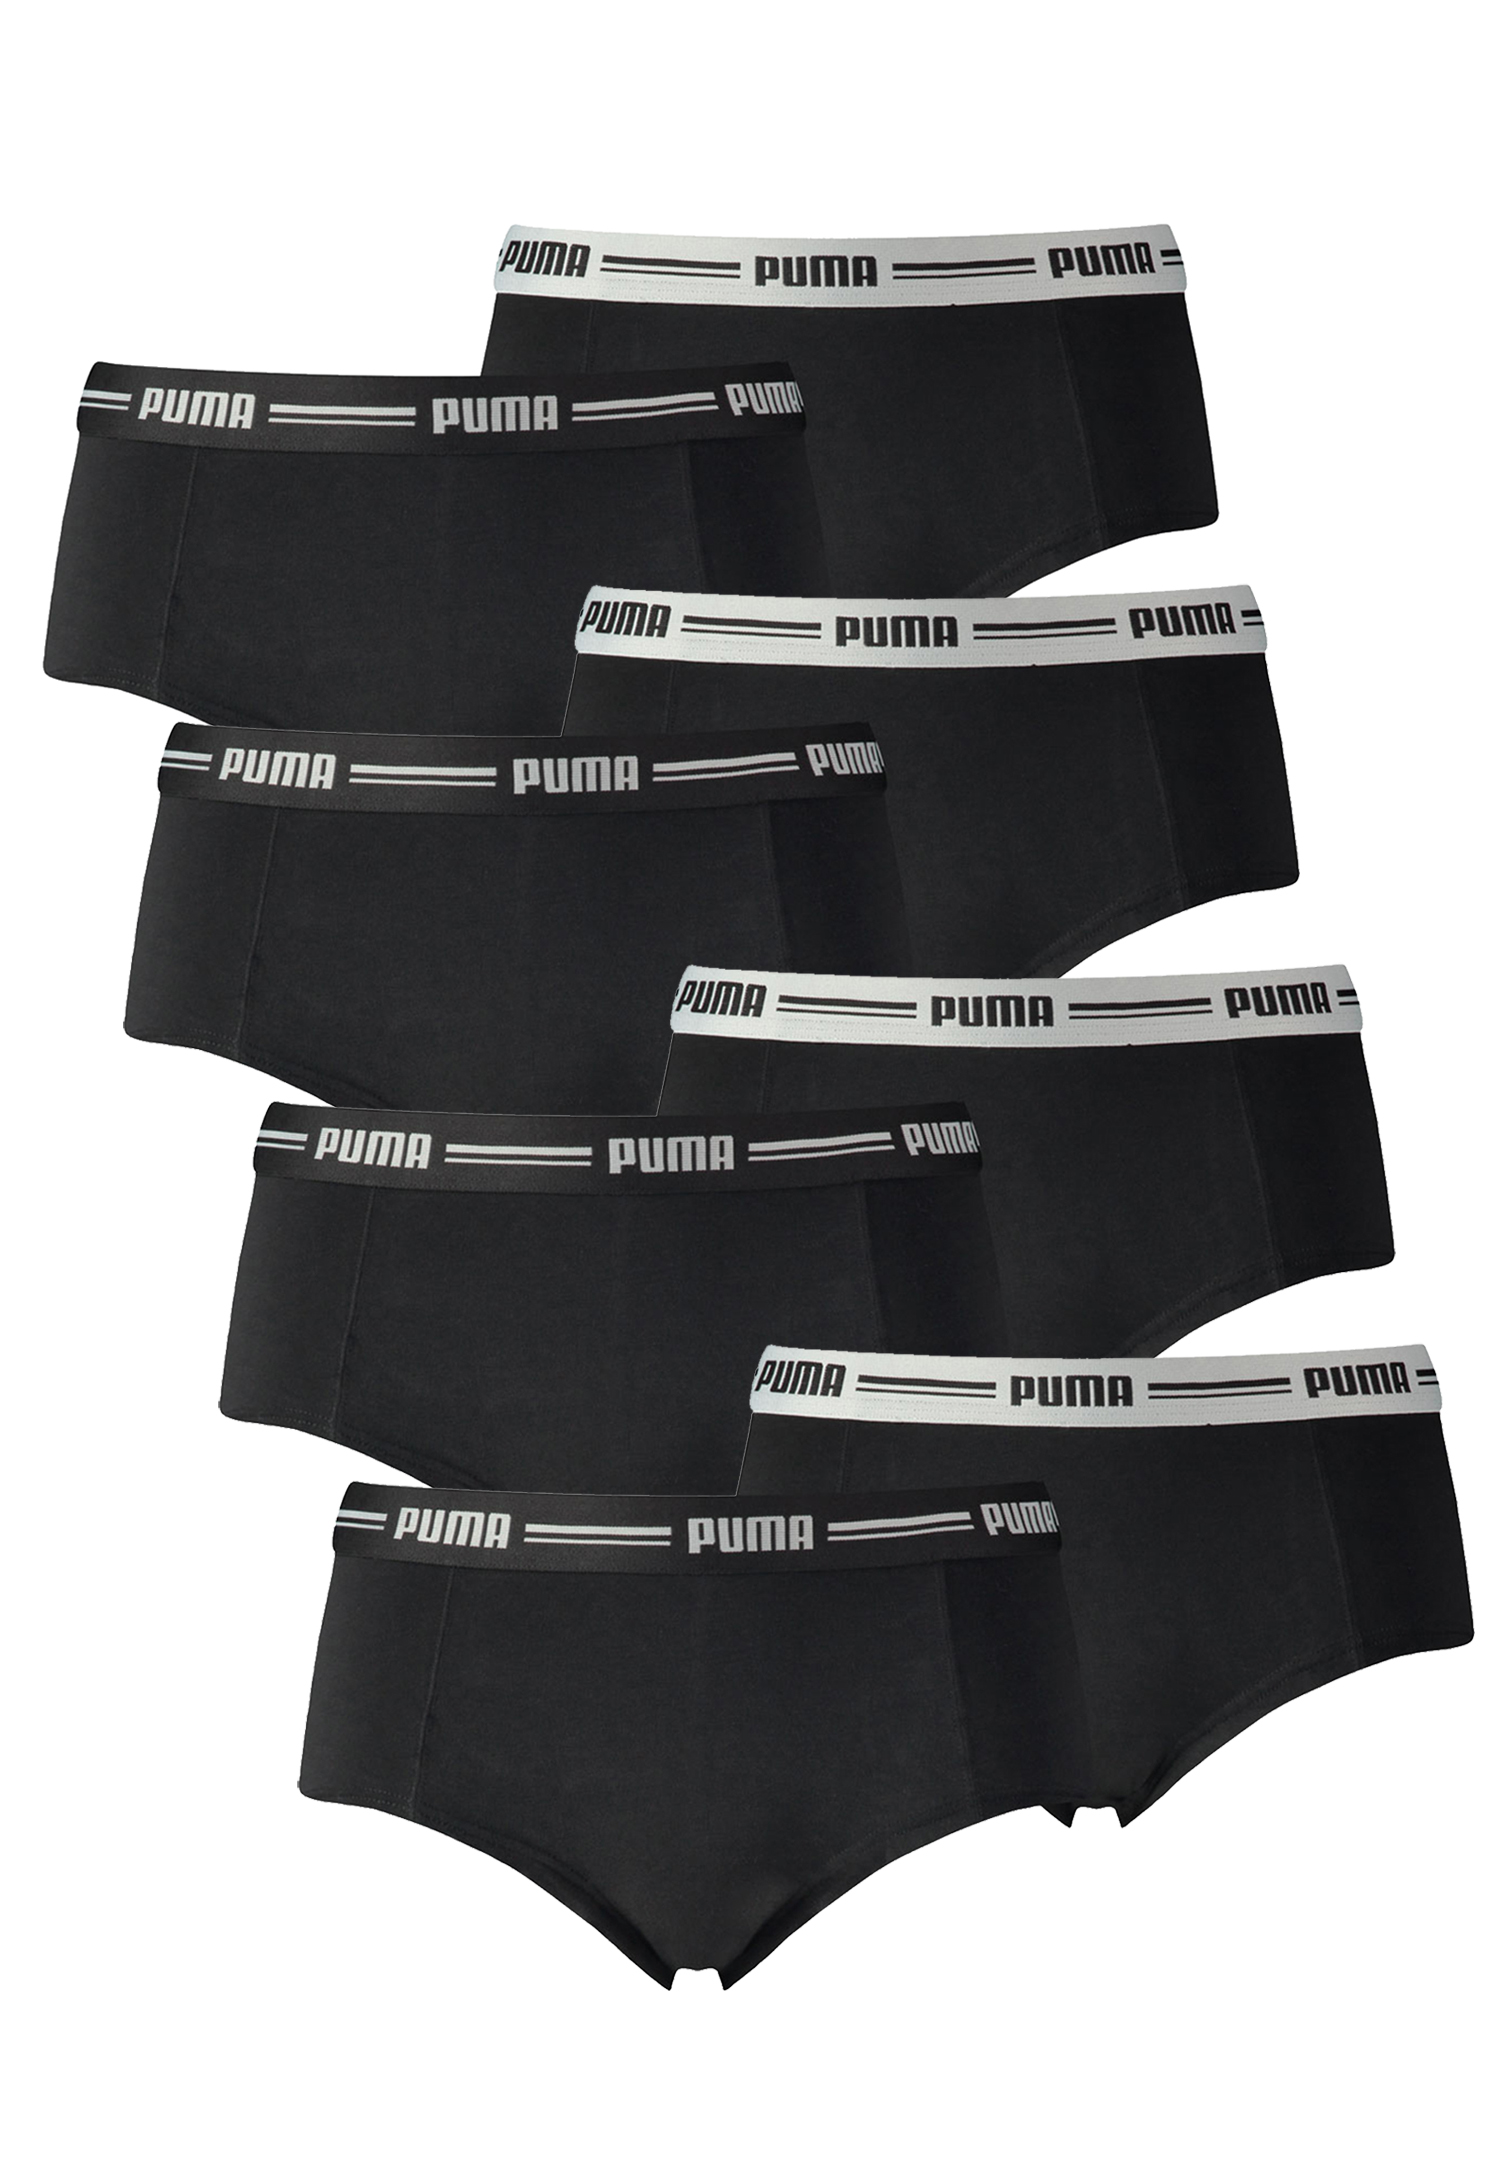 8er Pack Puma Iconic Mini Short Damen Panty Slip Shorty Unterwäsche Unterhose